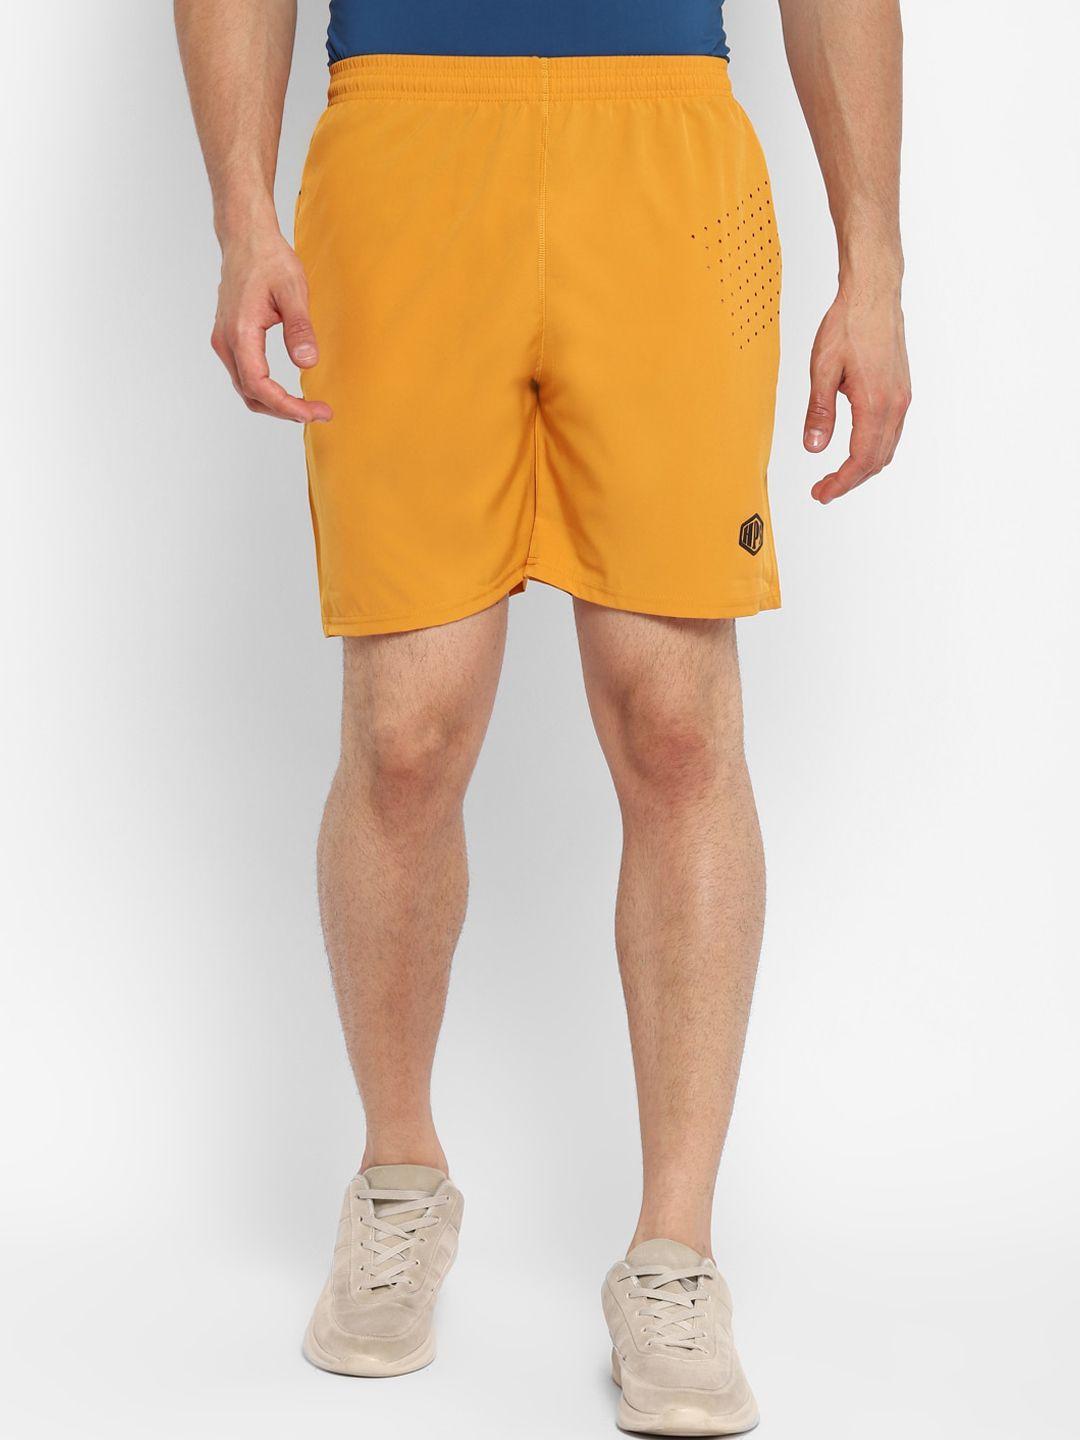 hps-sports-men-yellow-running-sports-shorts